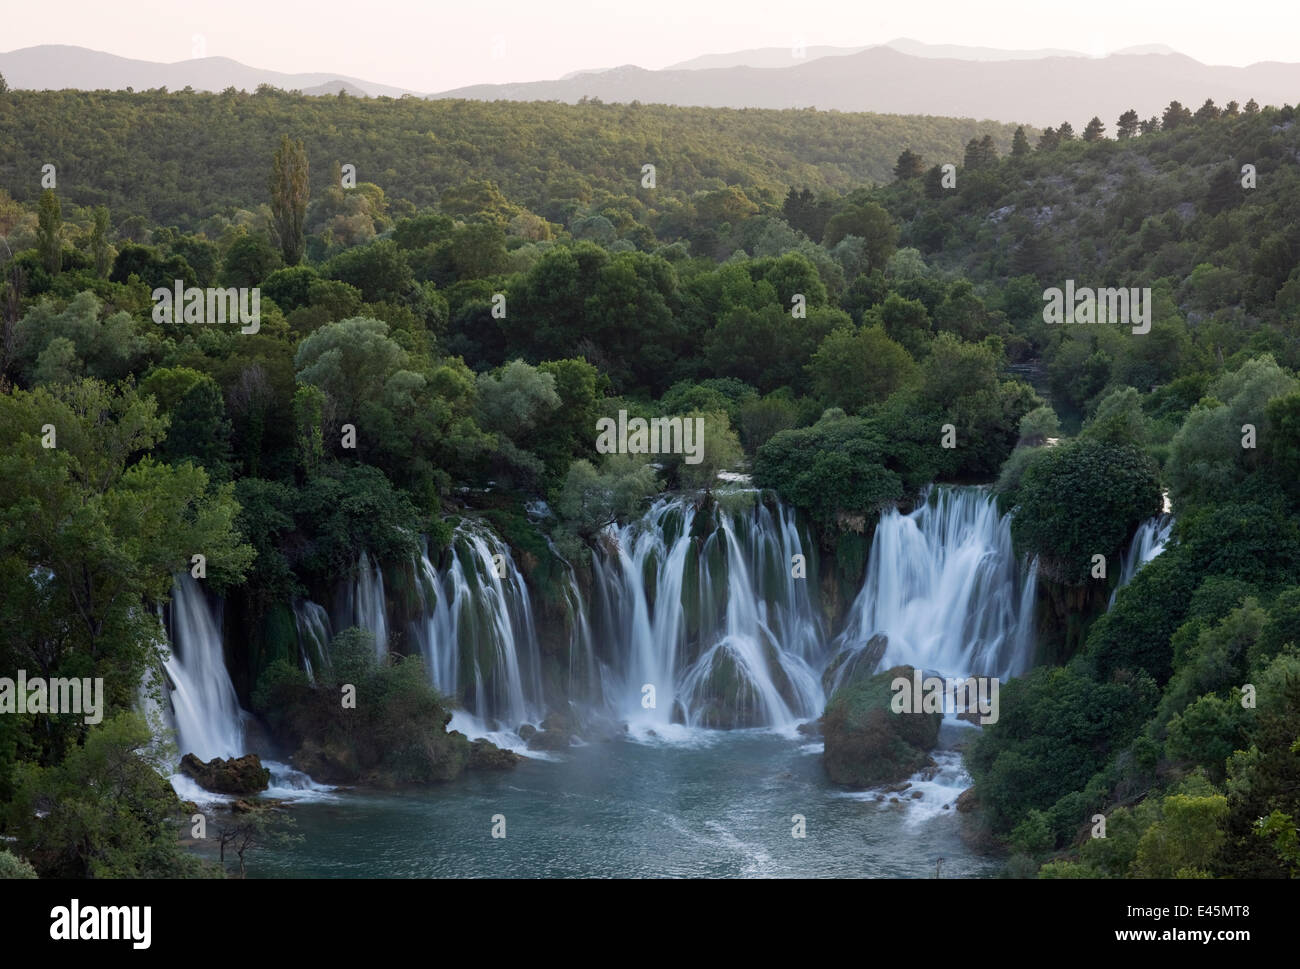 Kravice falls along the Trebizat River, Bosnia and Herzegovina, May 2009 Stock Photo